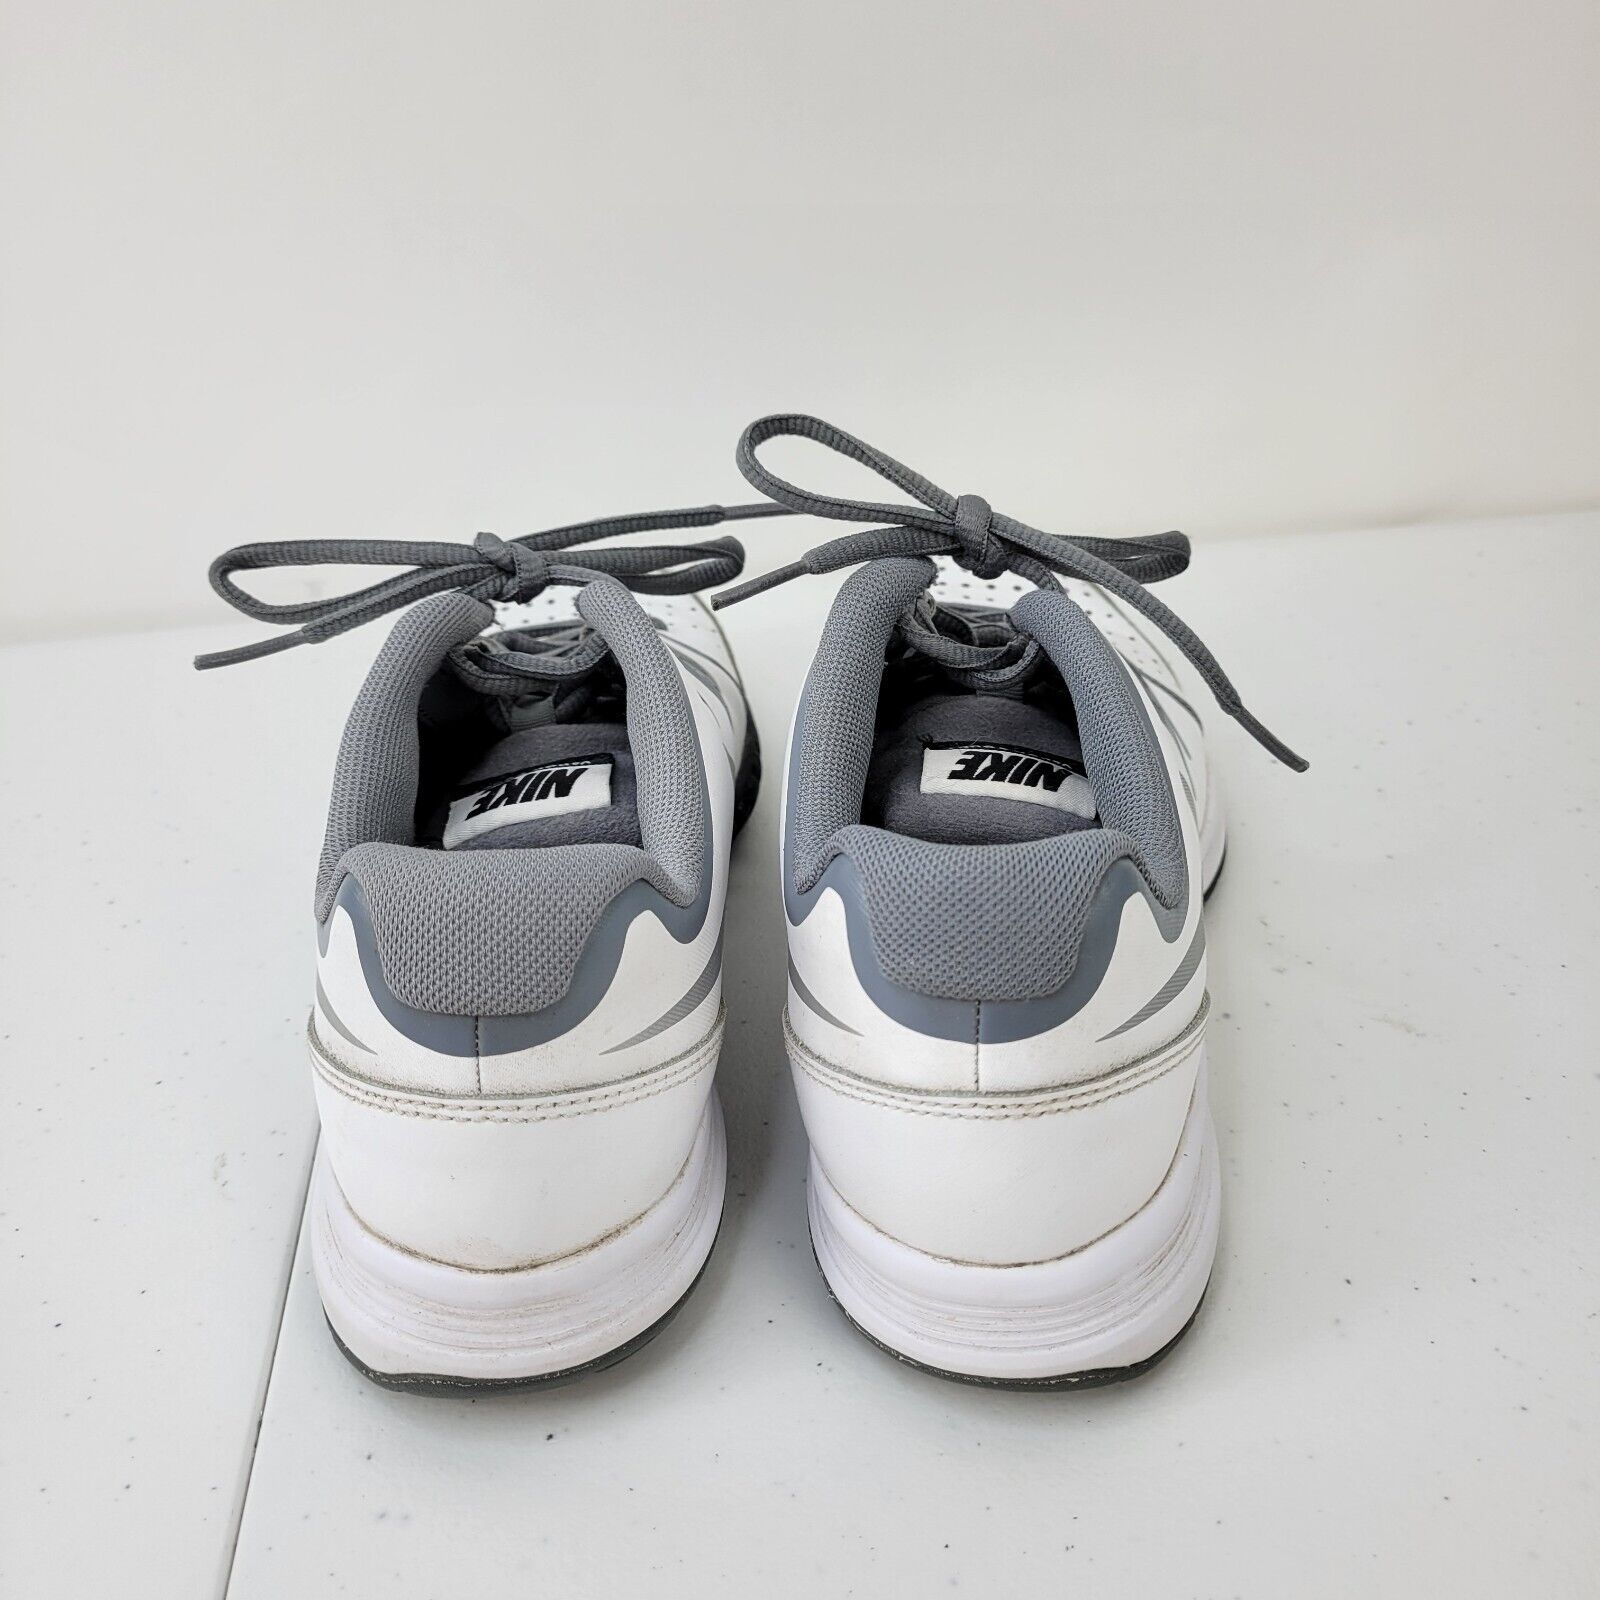 Nike Vapor Court Leather Womens Tennis Shoes Size 8.5 White Gray 631713-100